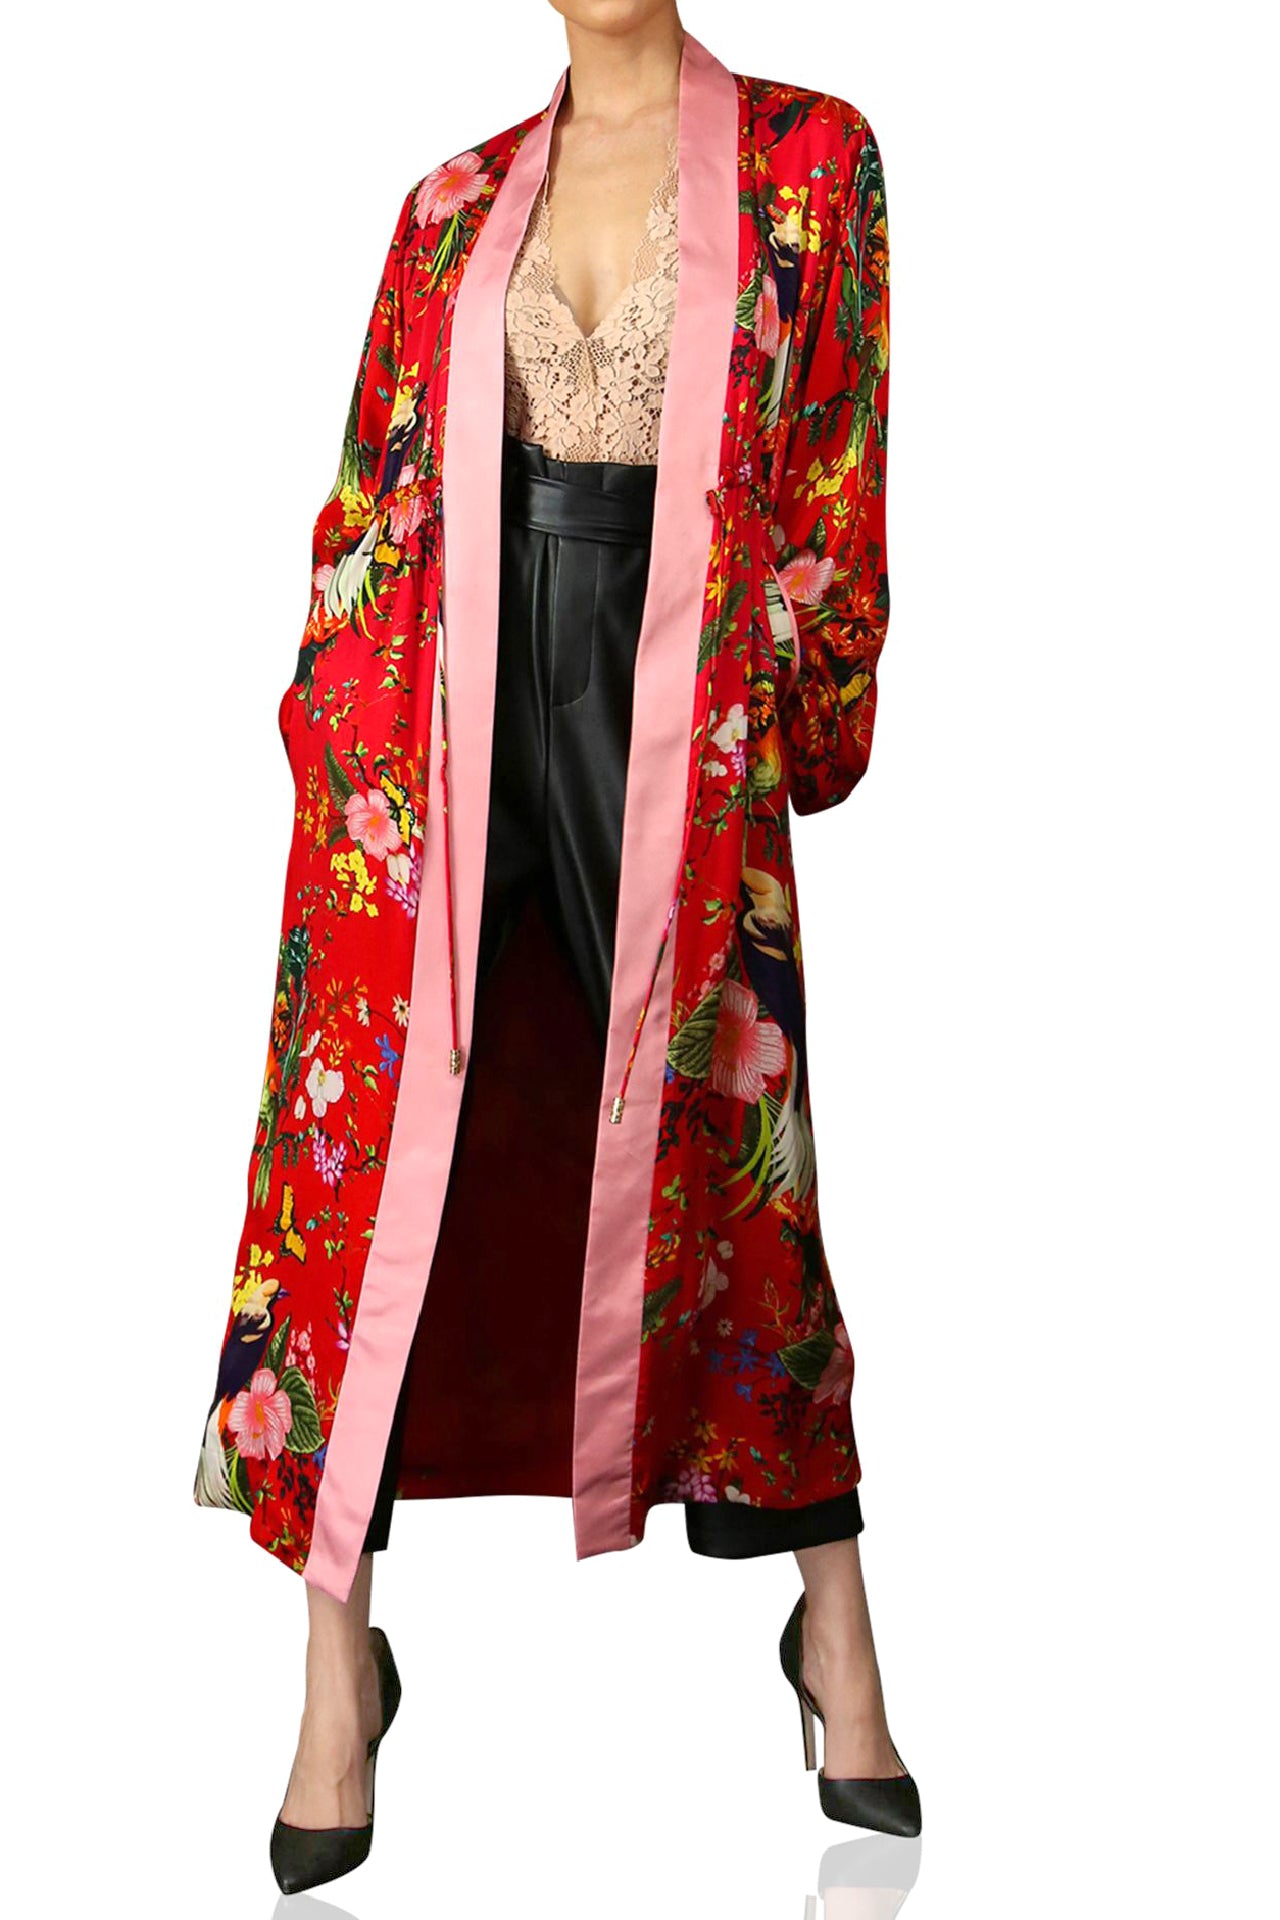 Silk-KImono-Robe-Dress-By-Kyle-Richards